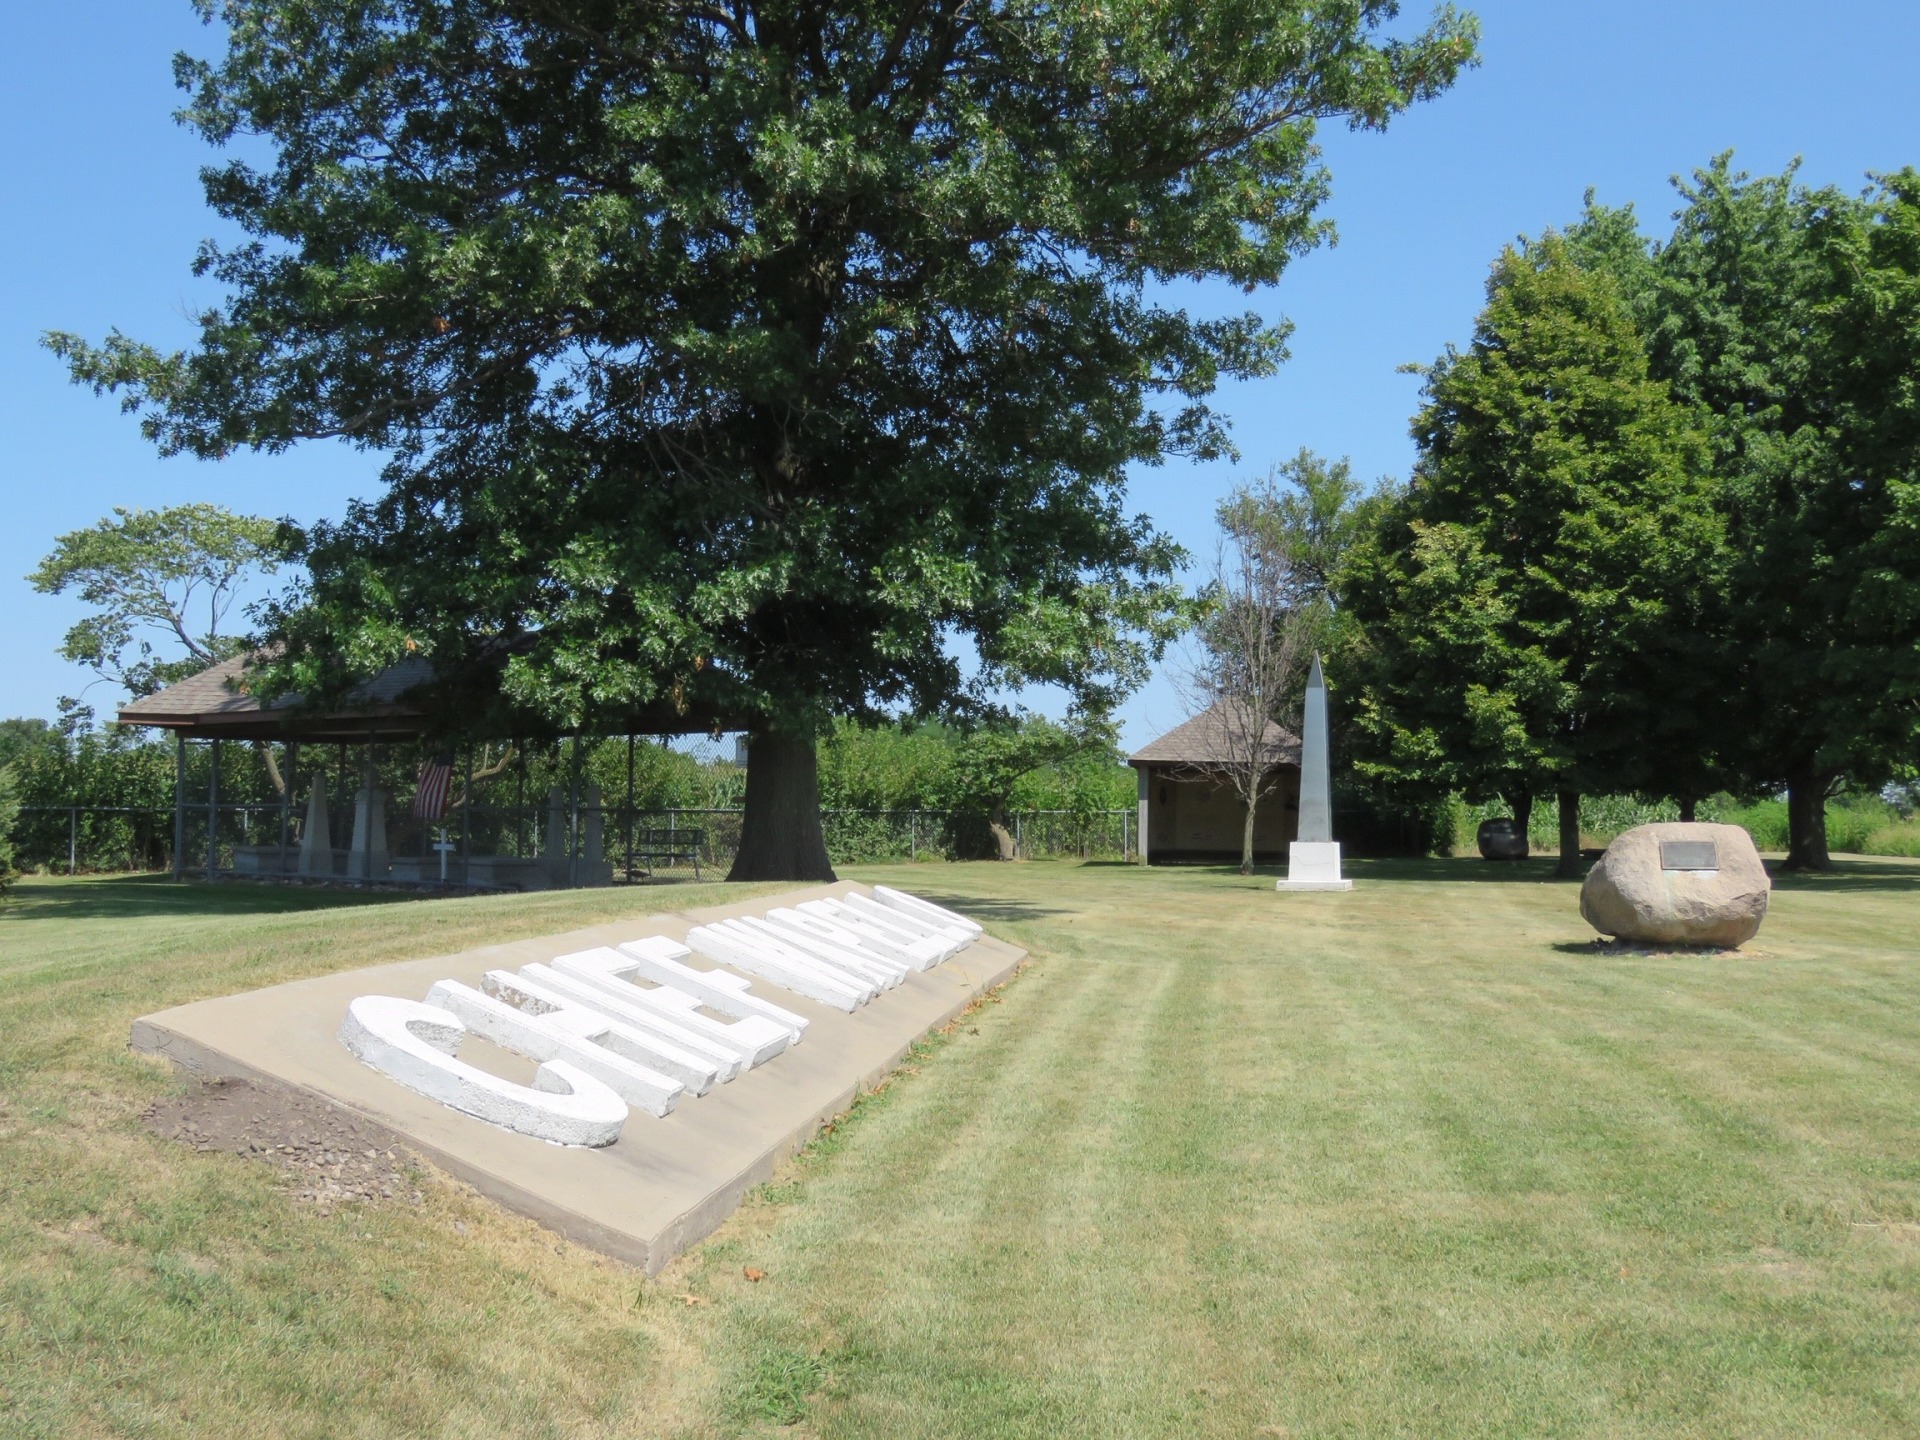 Chief Wapello's Gravesite and Memorial Park